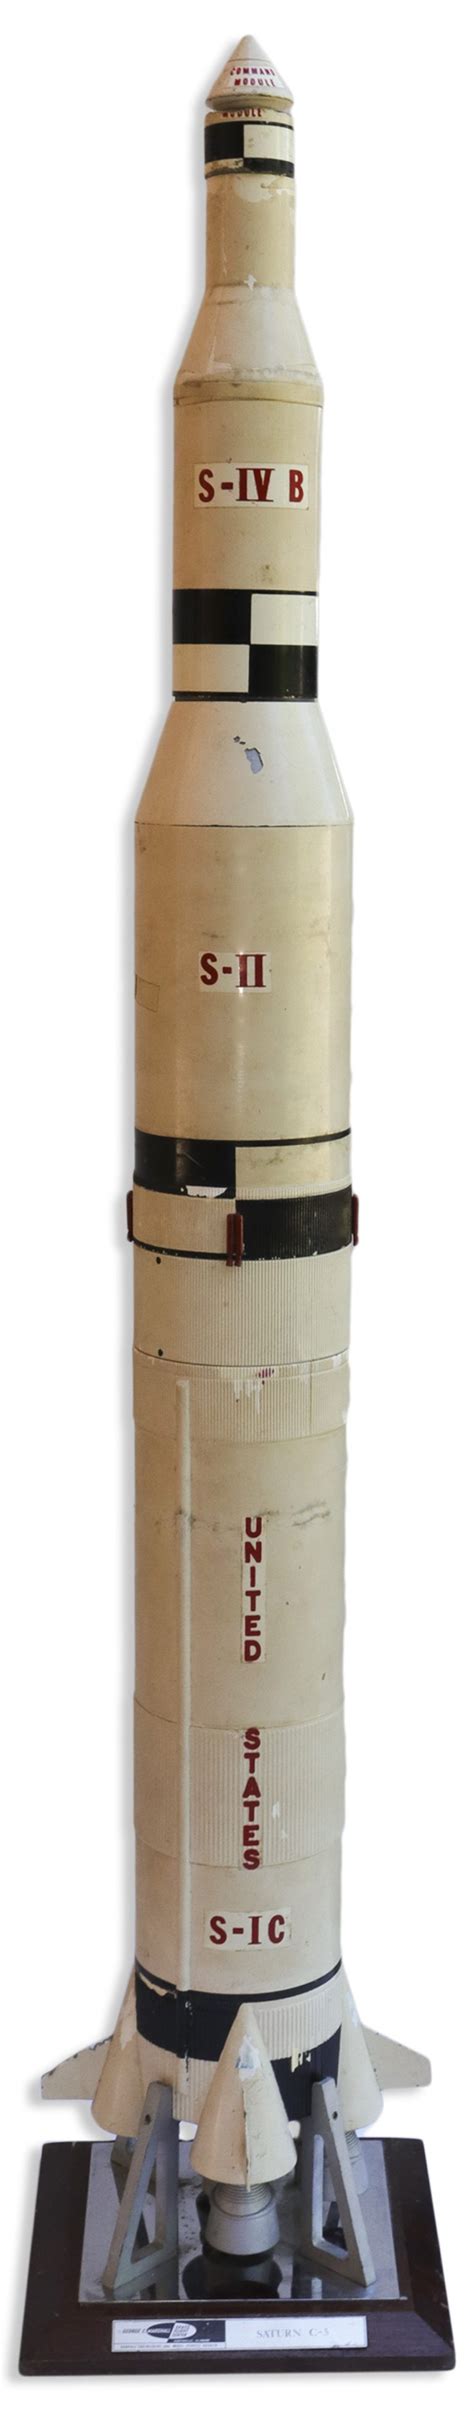 Sell Or Auction Your Original Vintage Apollo 11 Saturn V Rocket Model